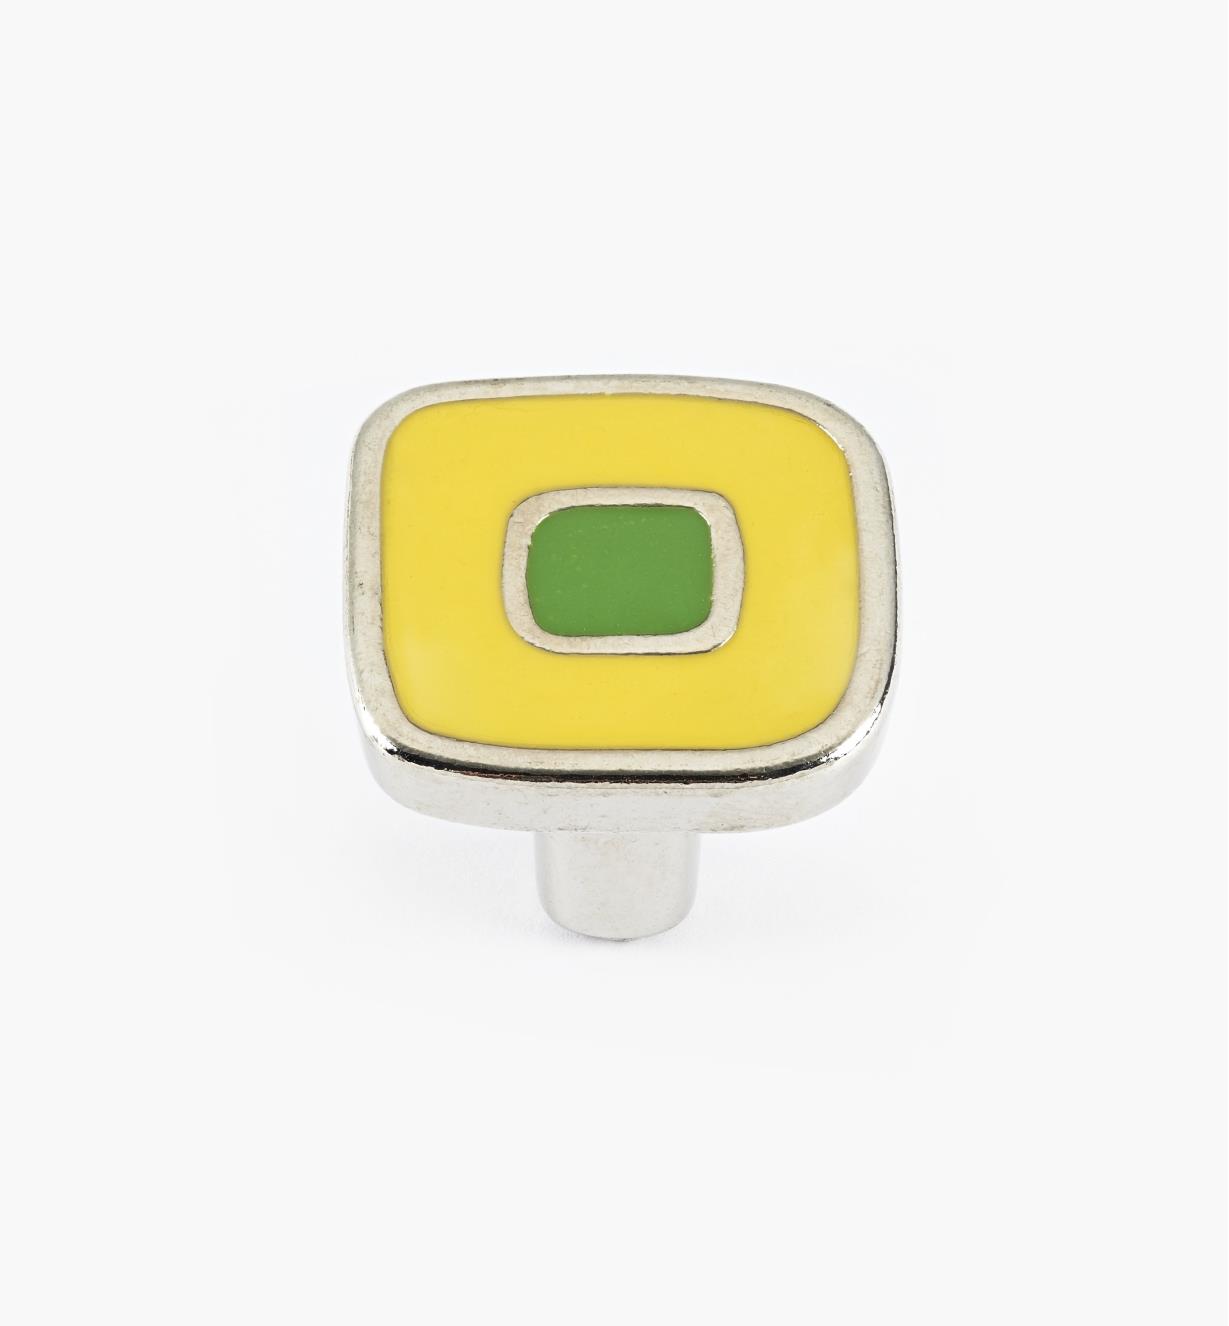 01X4360 - Enamel Infill 30mm Small Yellow/Green Knob